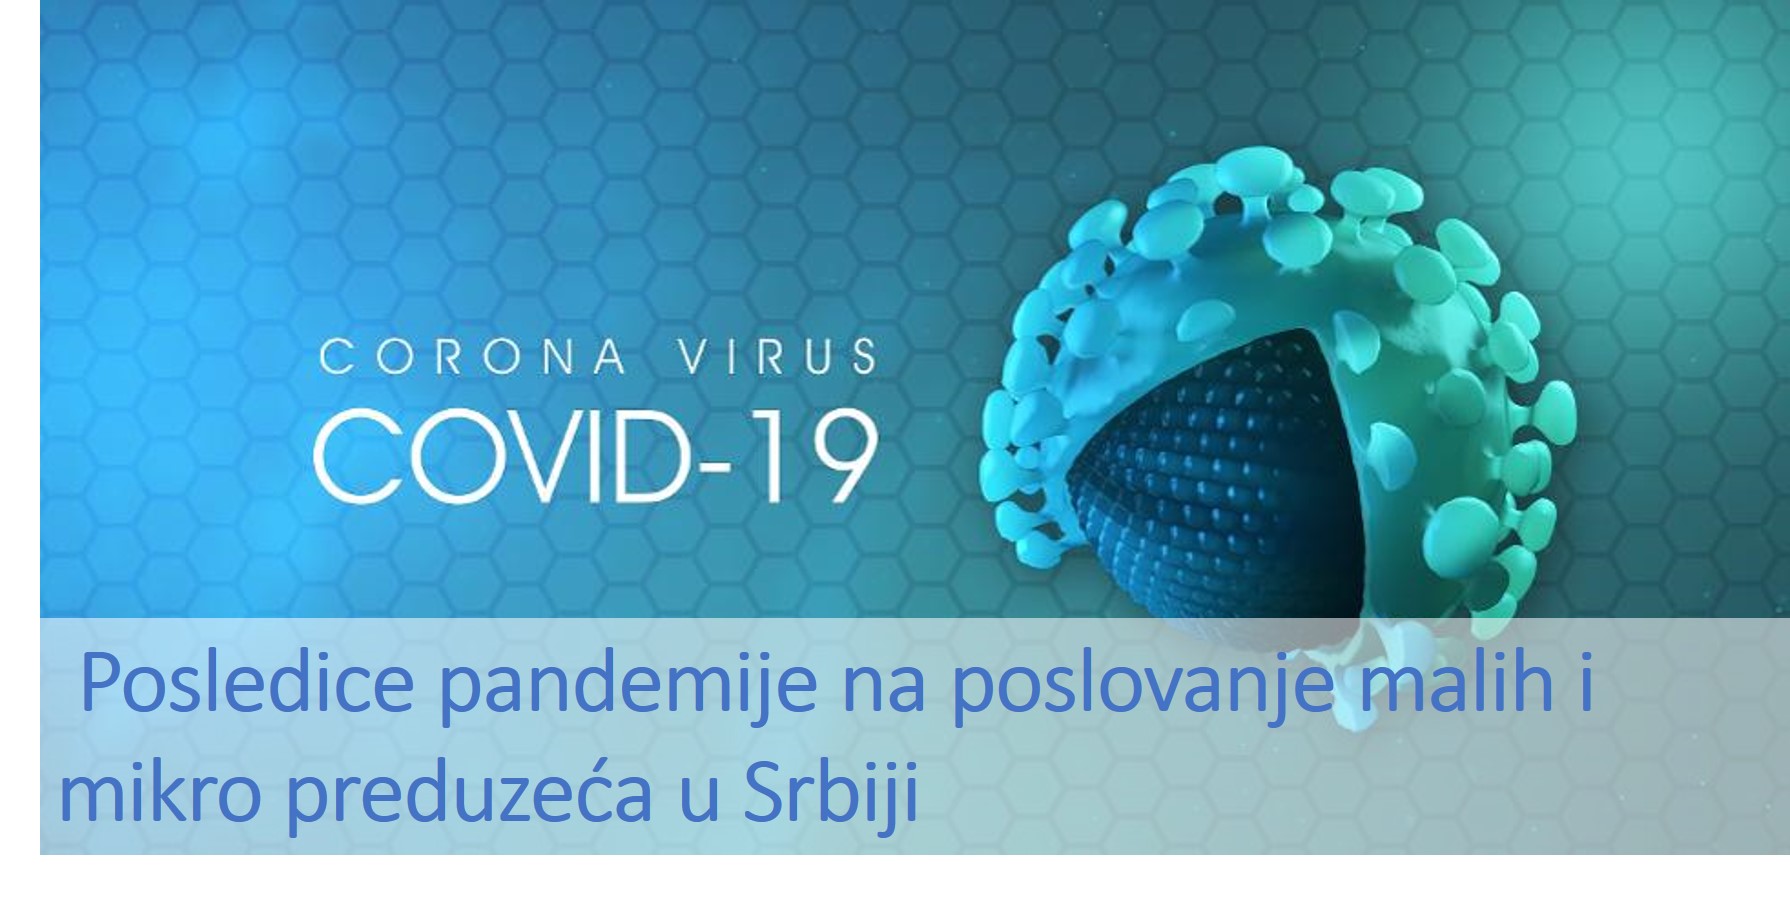 Analiza: posledice pandemije na poslovanje mikro i malih preduzeća u Srbiji